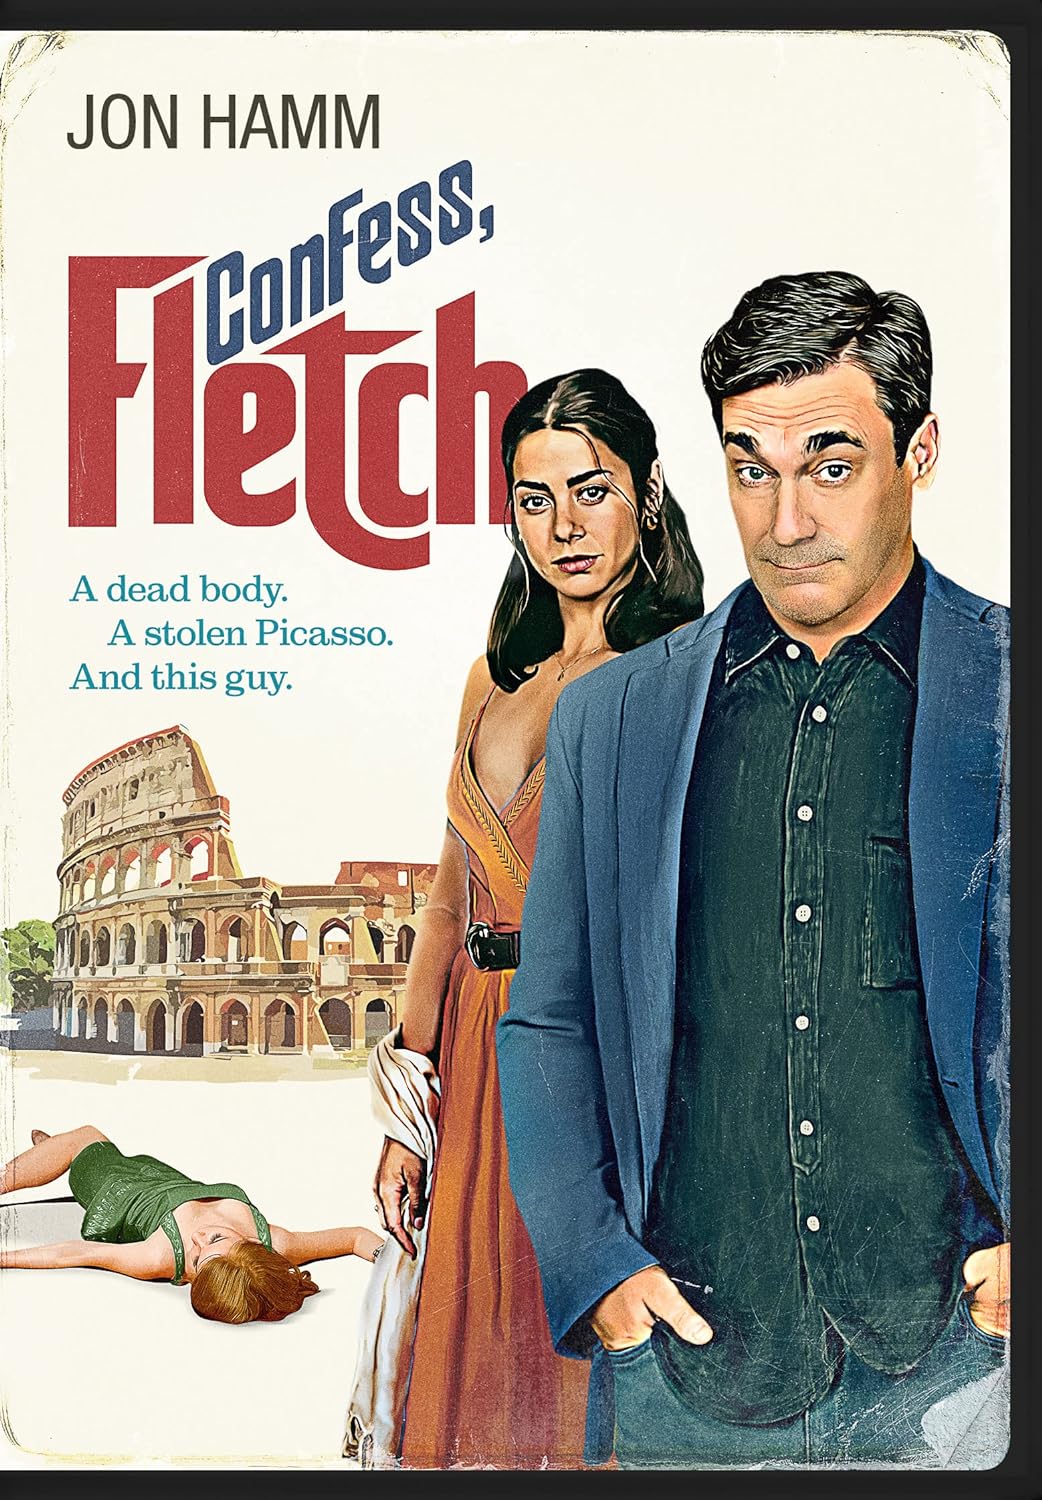 Confess, Fletch (2022, DVD)